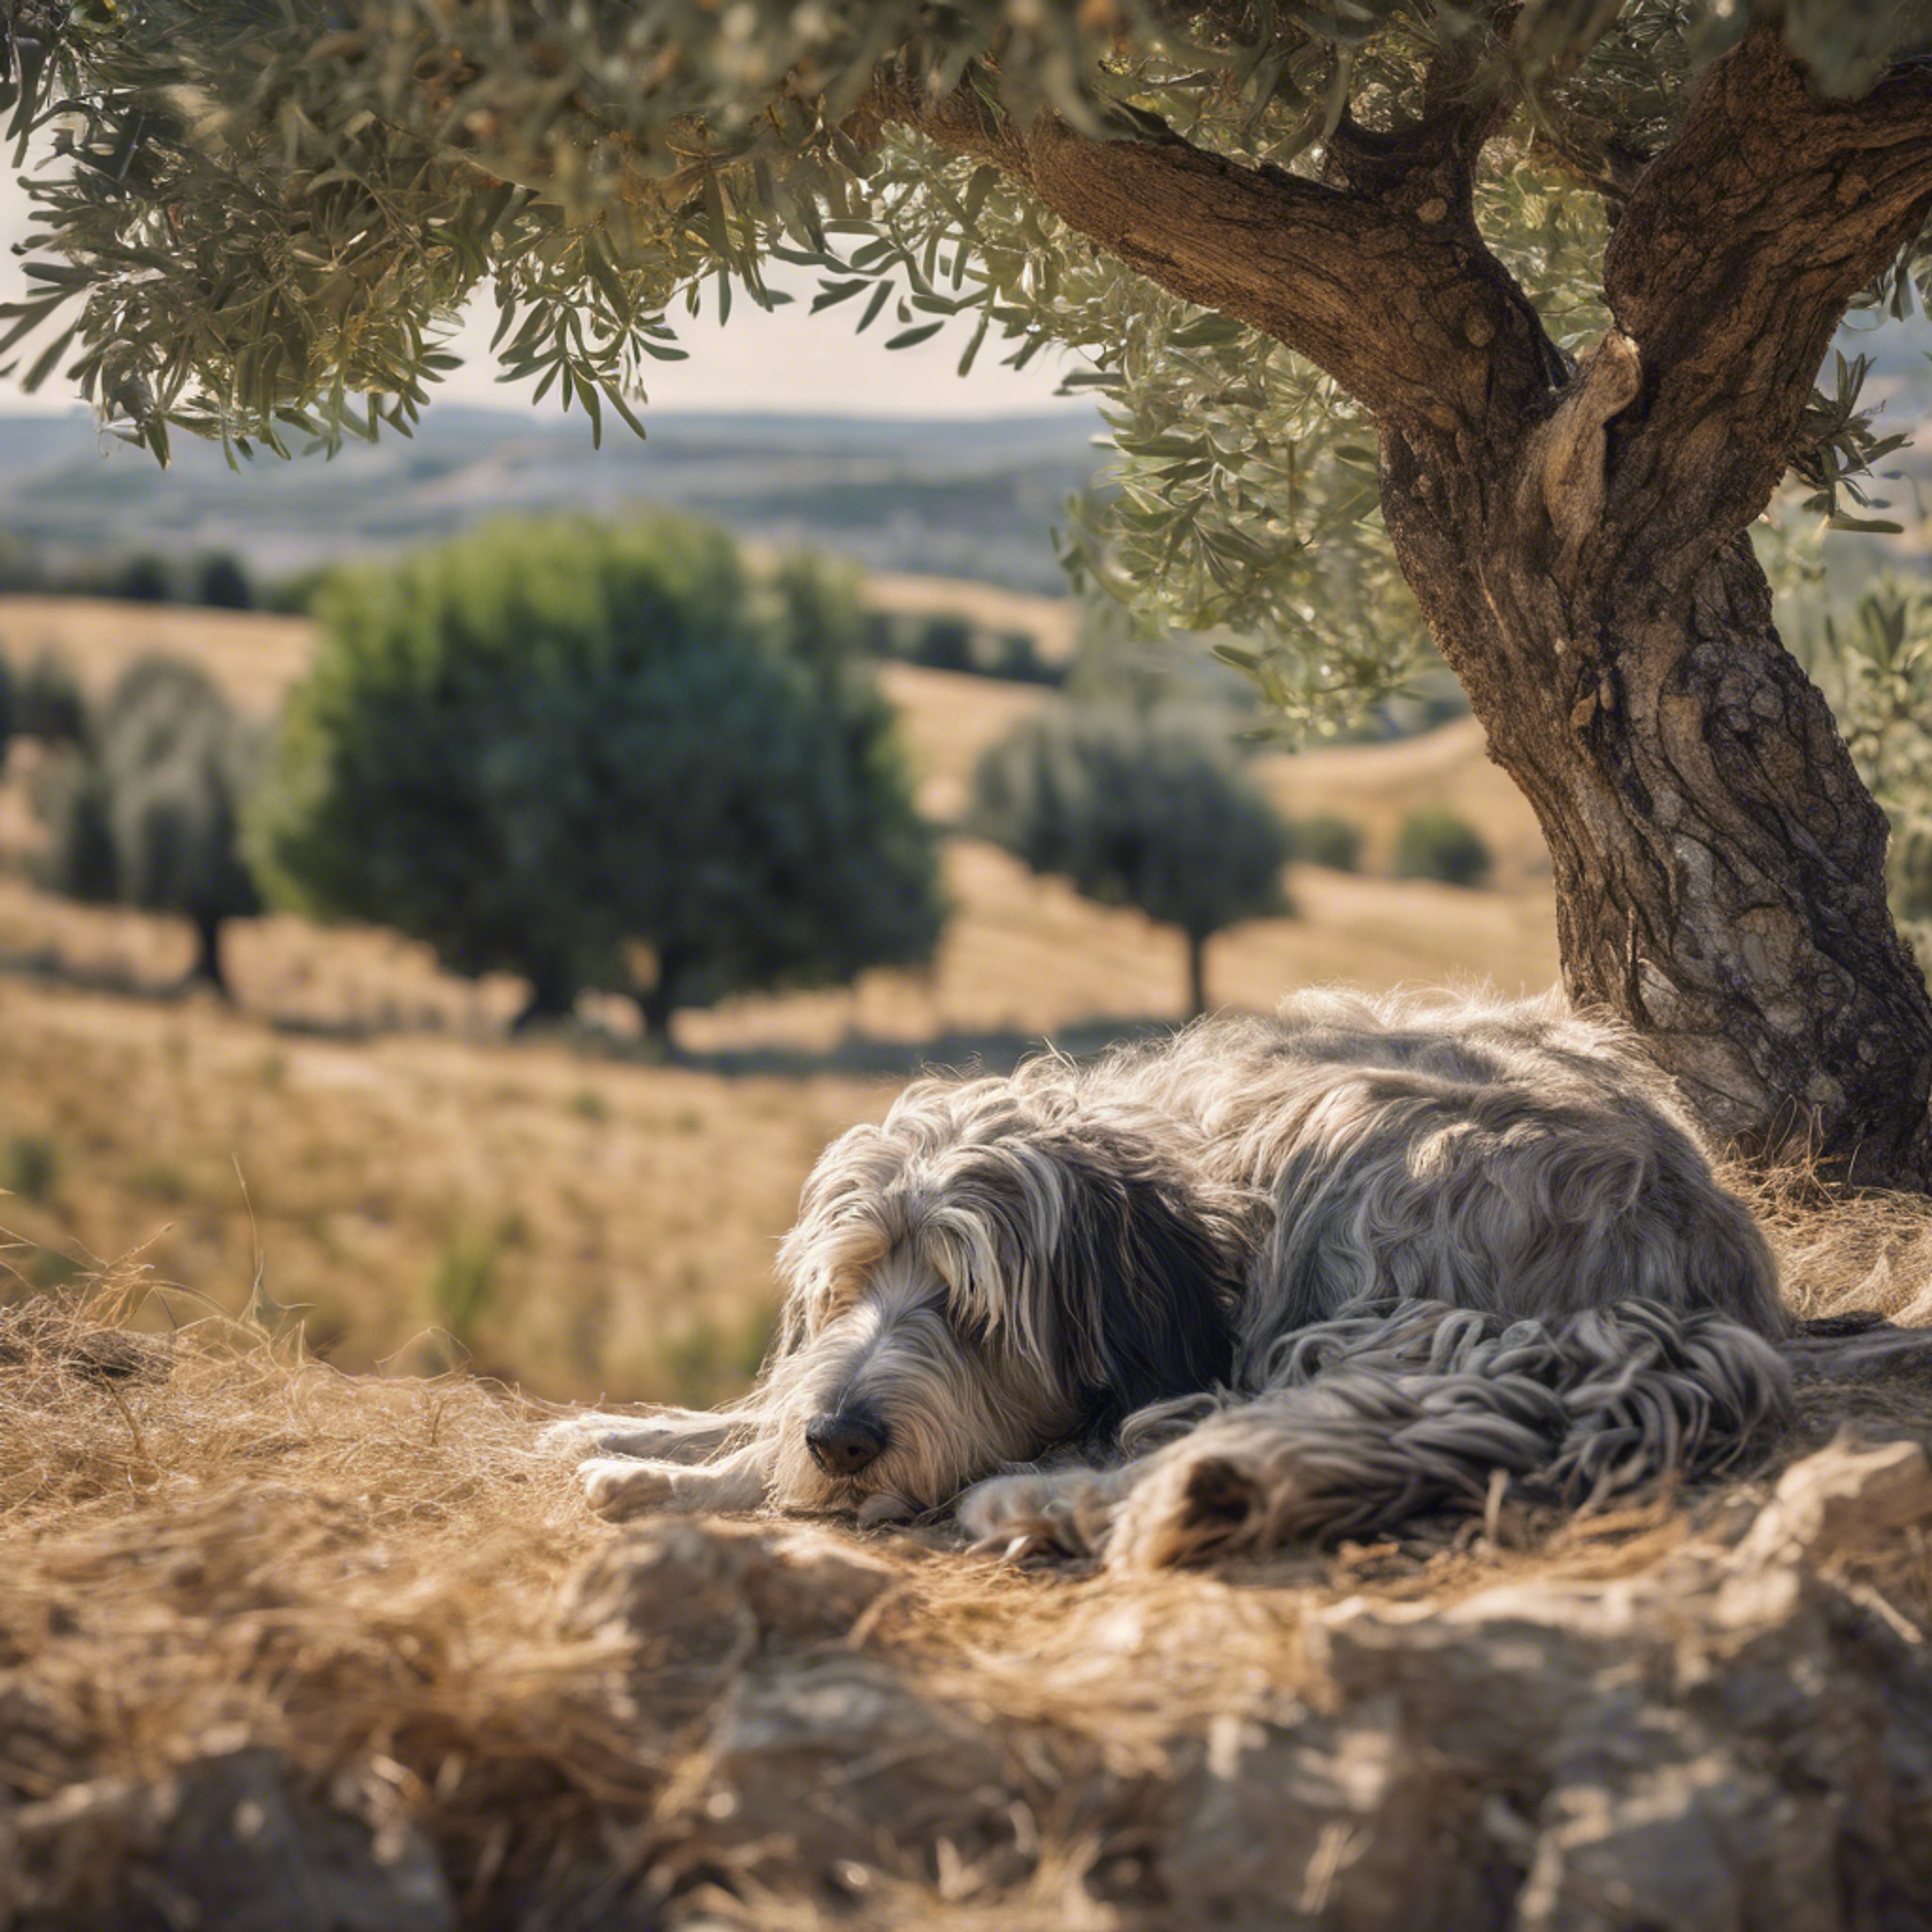 A Bergamasco Shepherd dog asleep under an olive tree, an Italian hillside village in the distance.壁紙[a97fa22003454657b486]